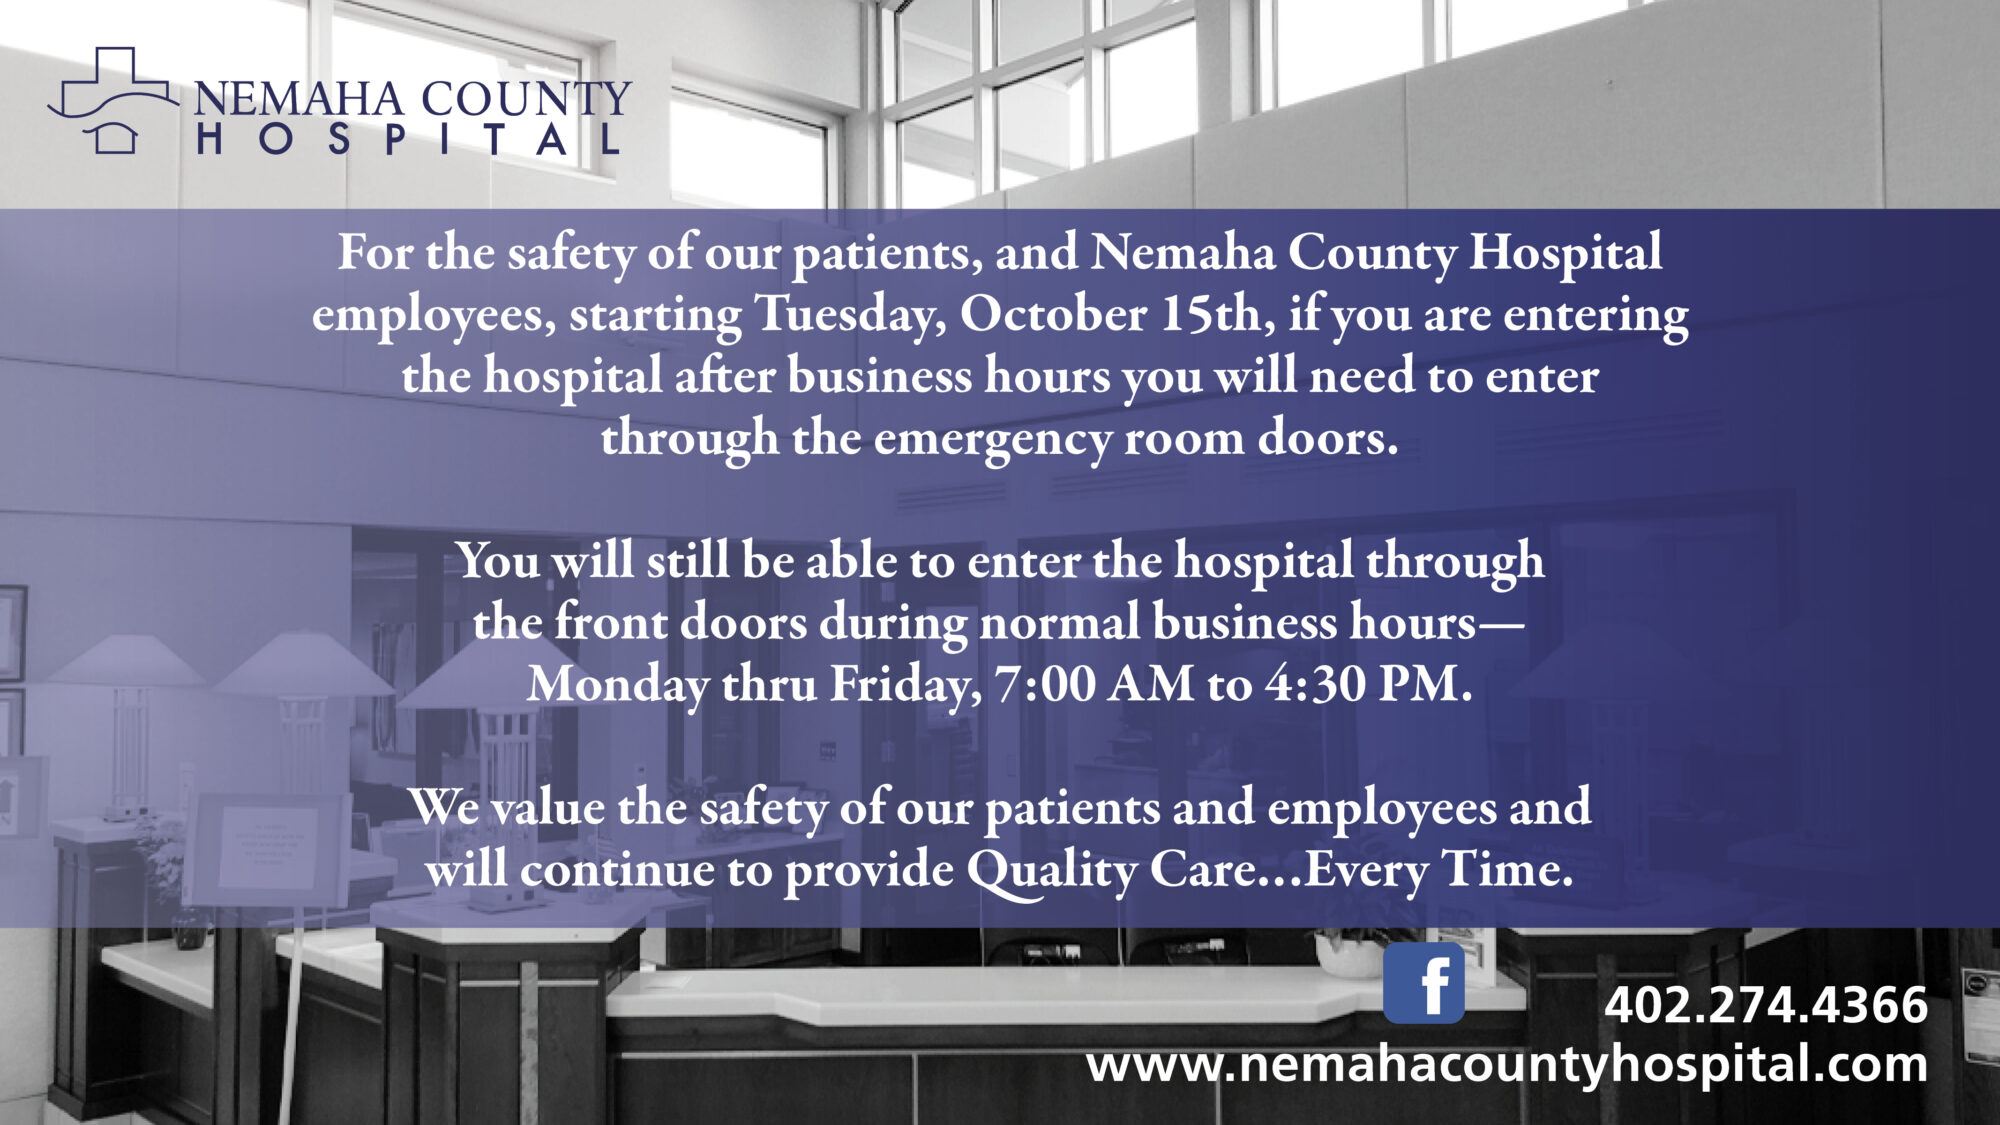 Nemaha County Hospital Quality Care Every Time